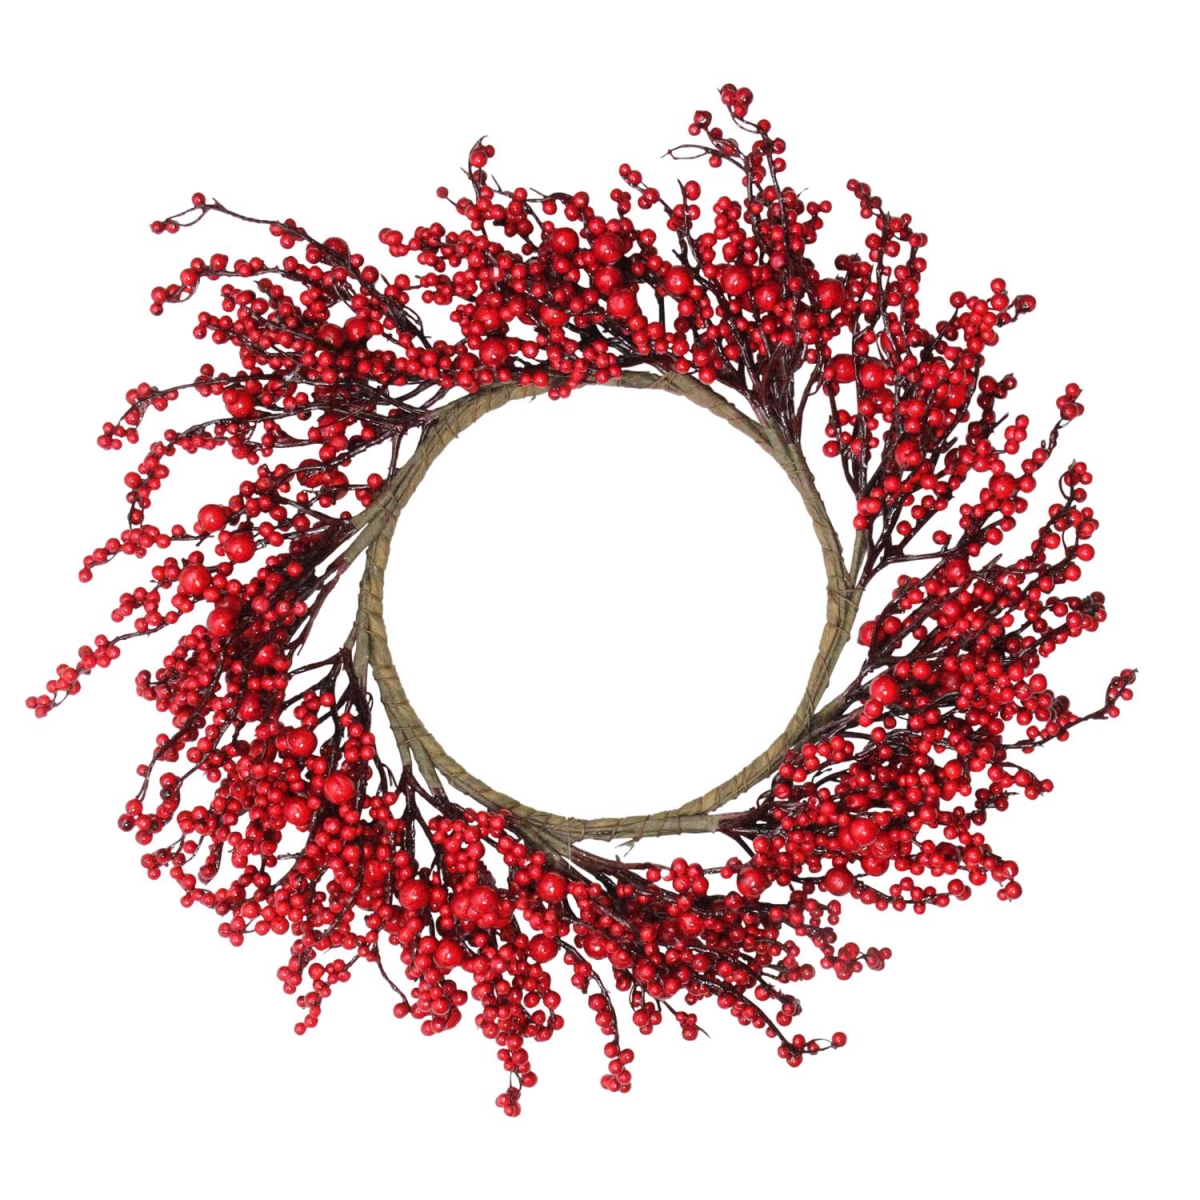 32635085 22 In. Festive Red Berries Artificial Christmas Wreath - Unlit